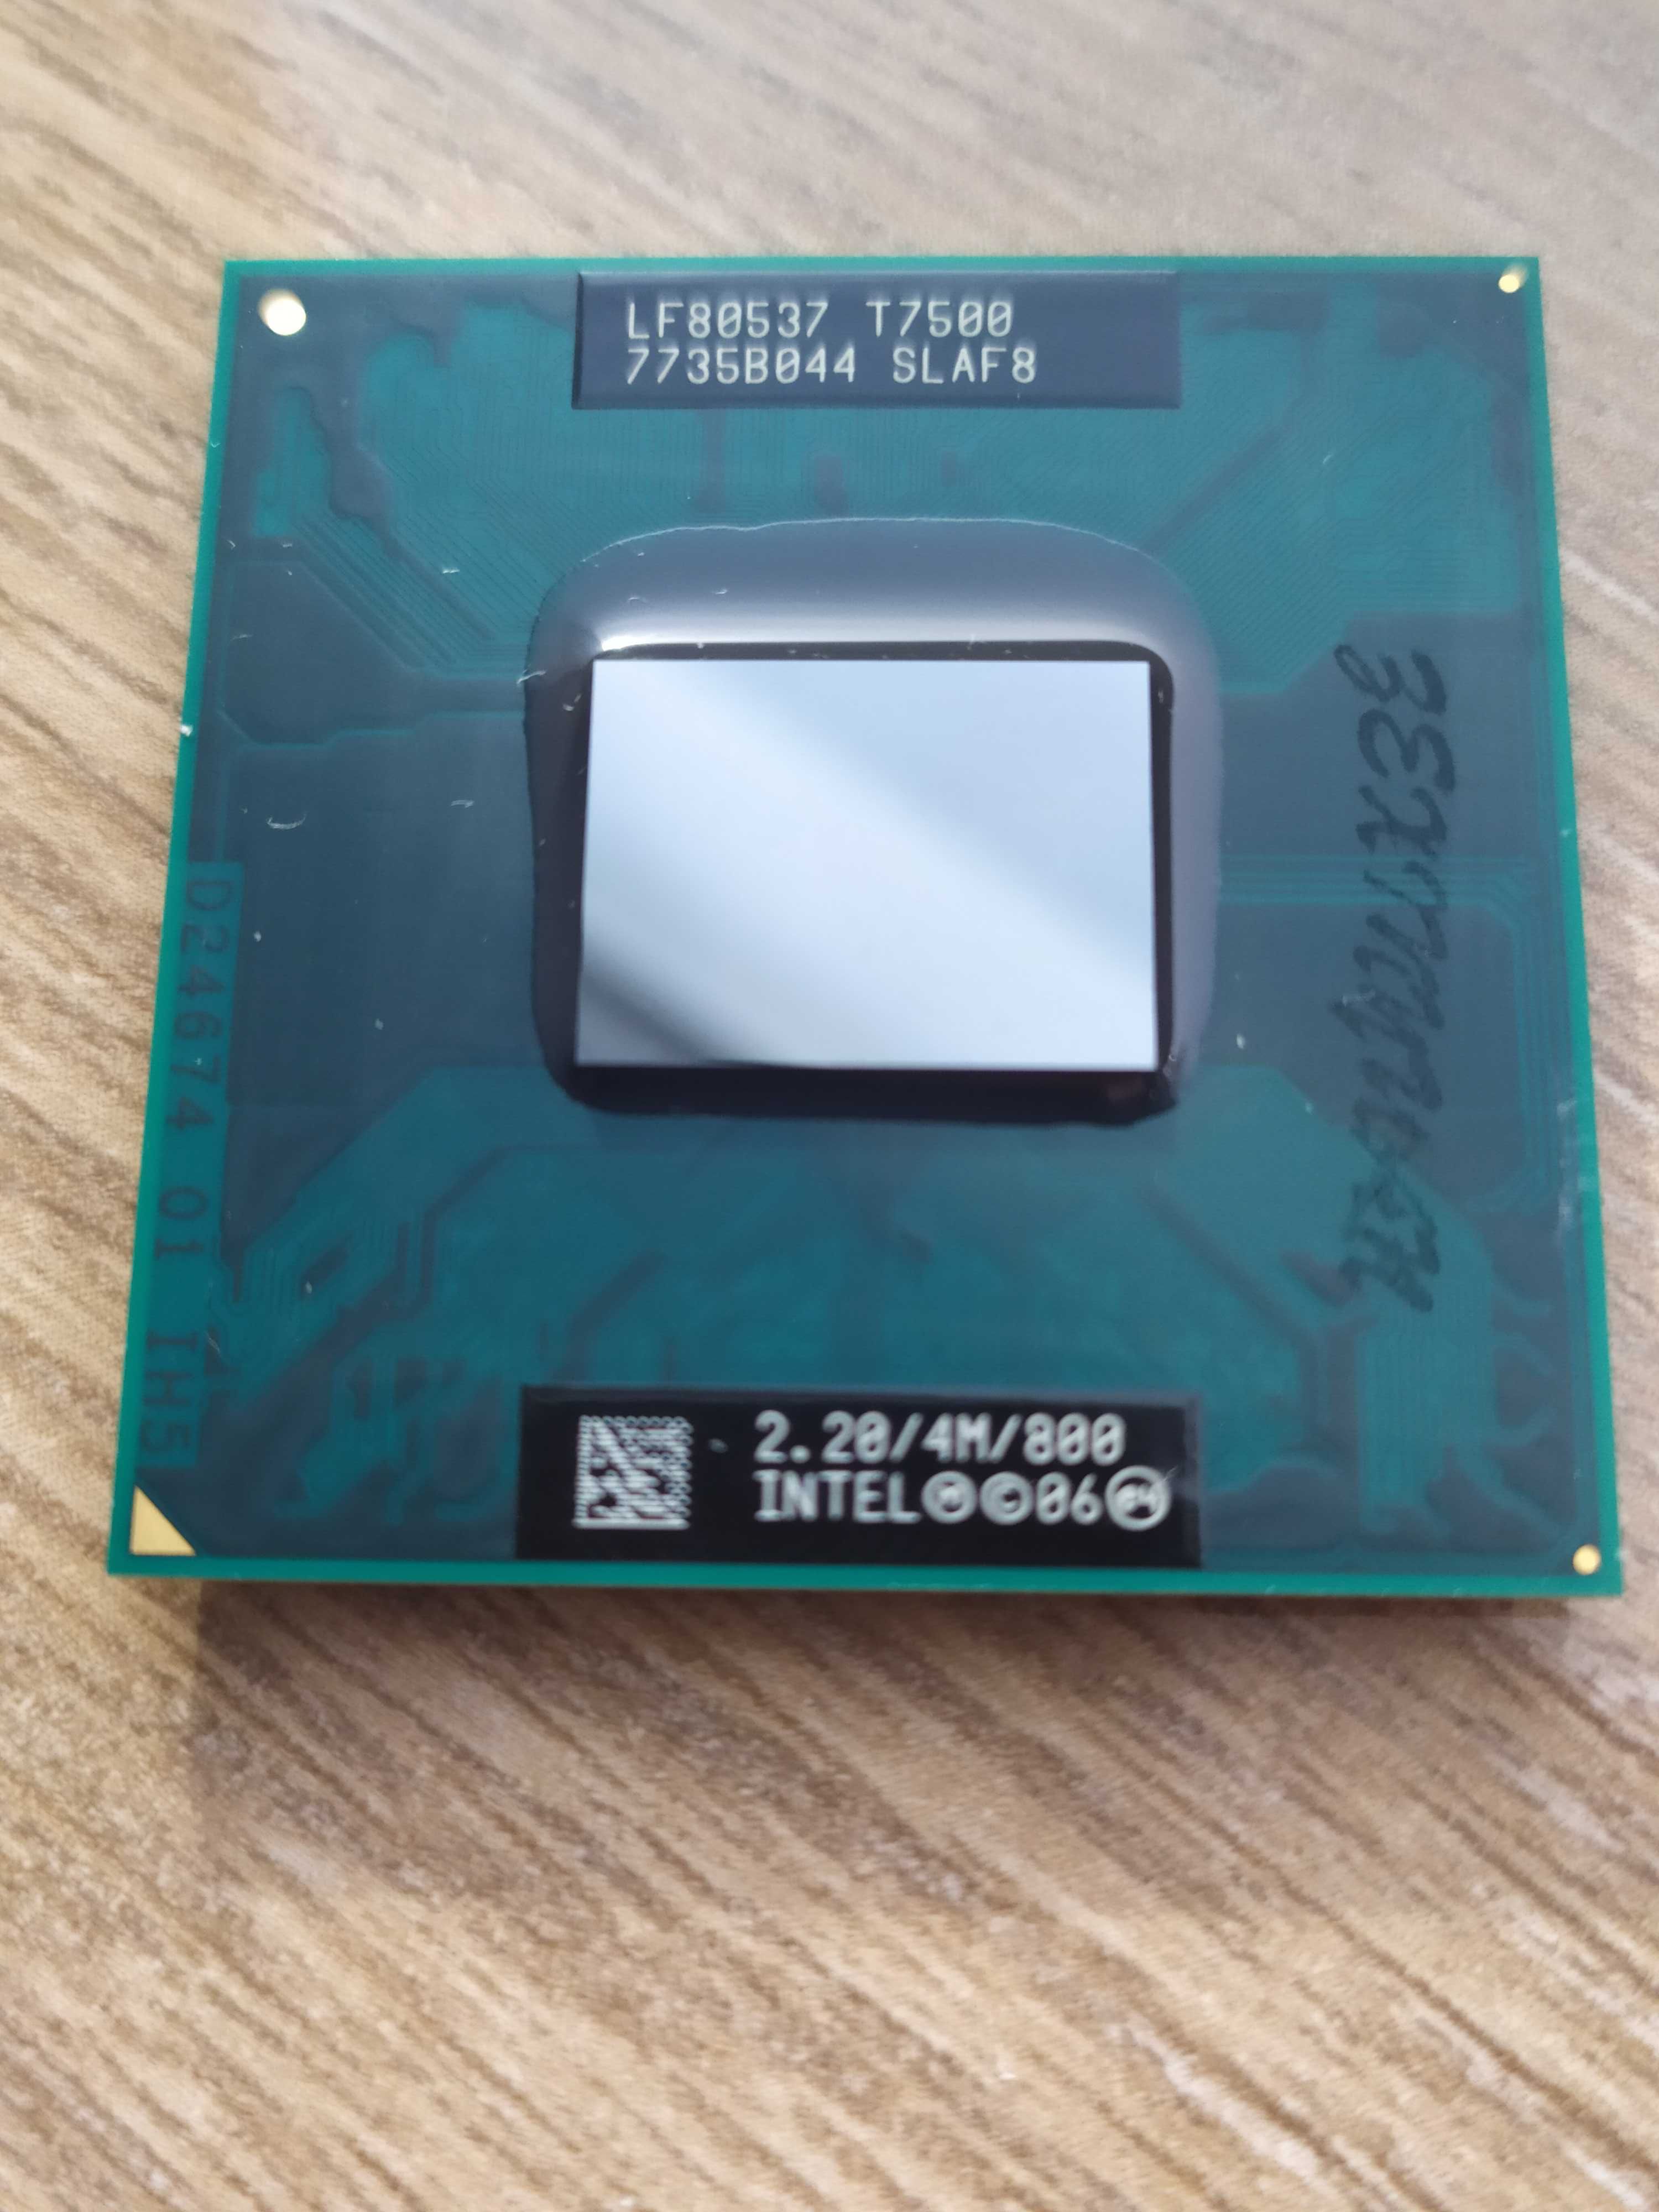 Процессор Intel Core 2 Duo T7700 2.4 GHz, 800 MHz. Сокет P. T8300/7500